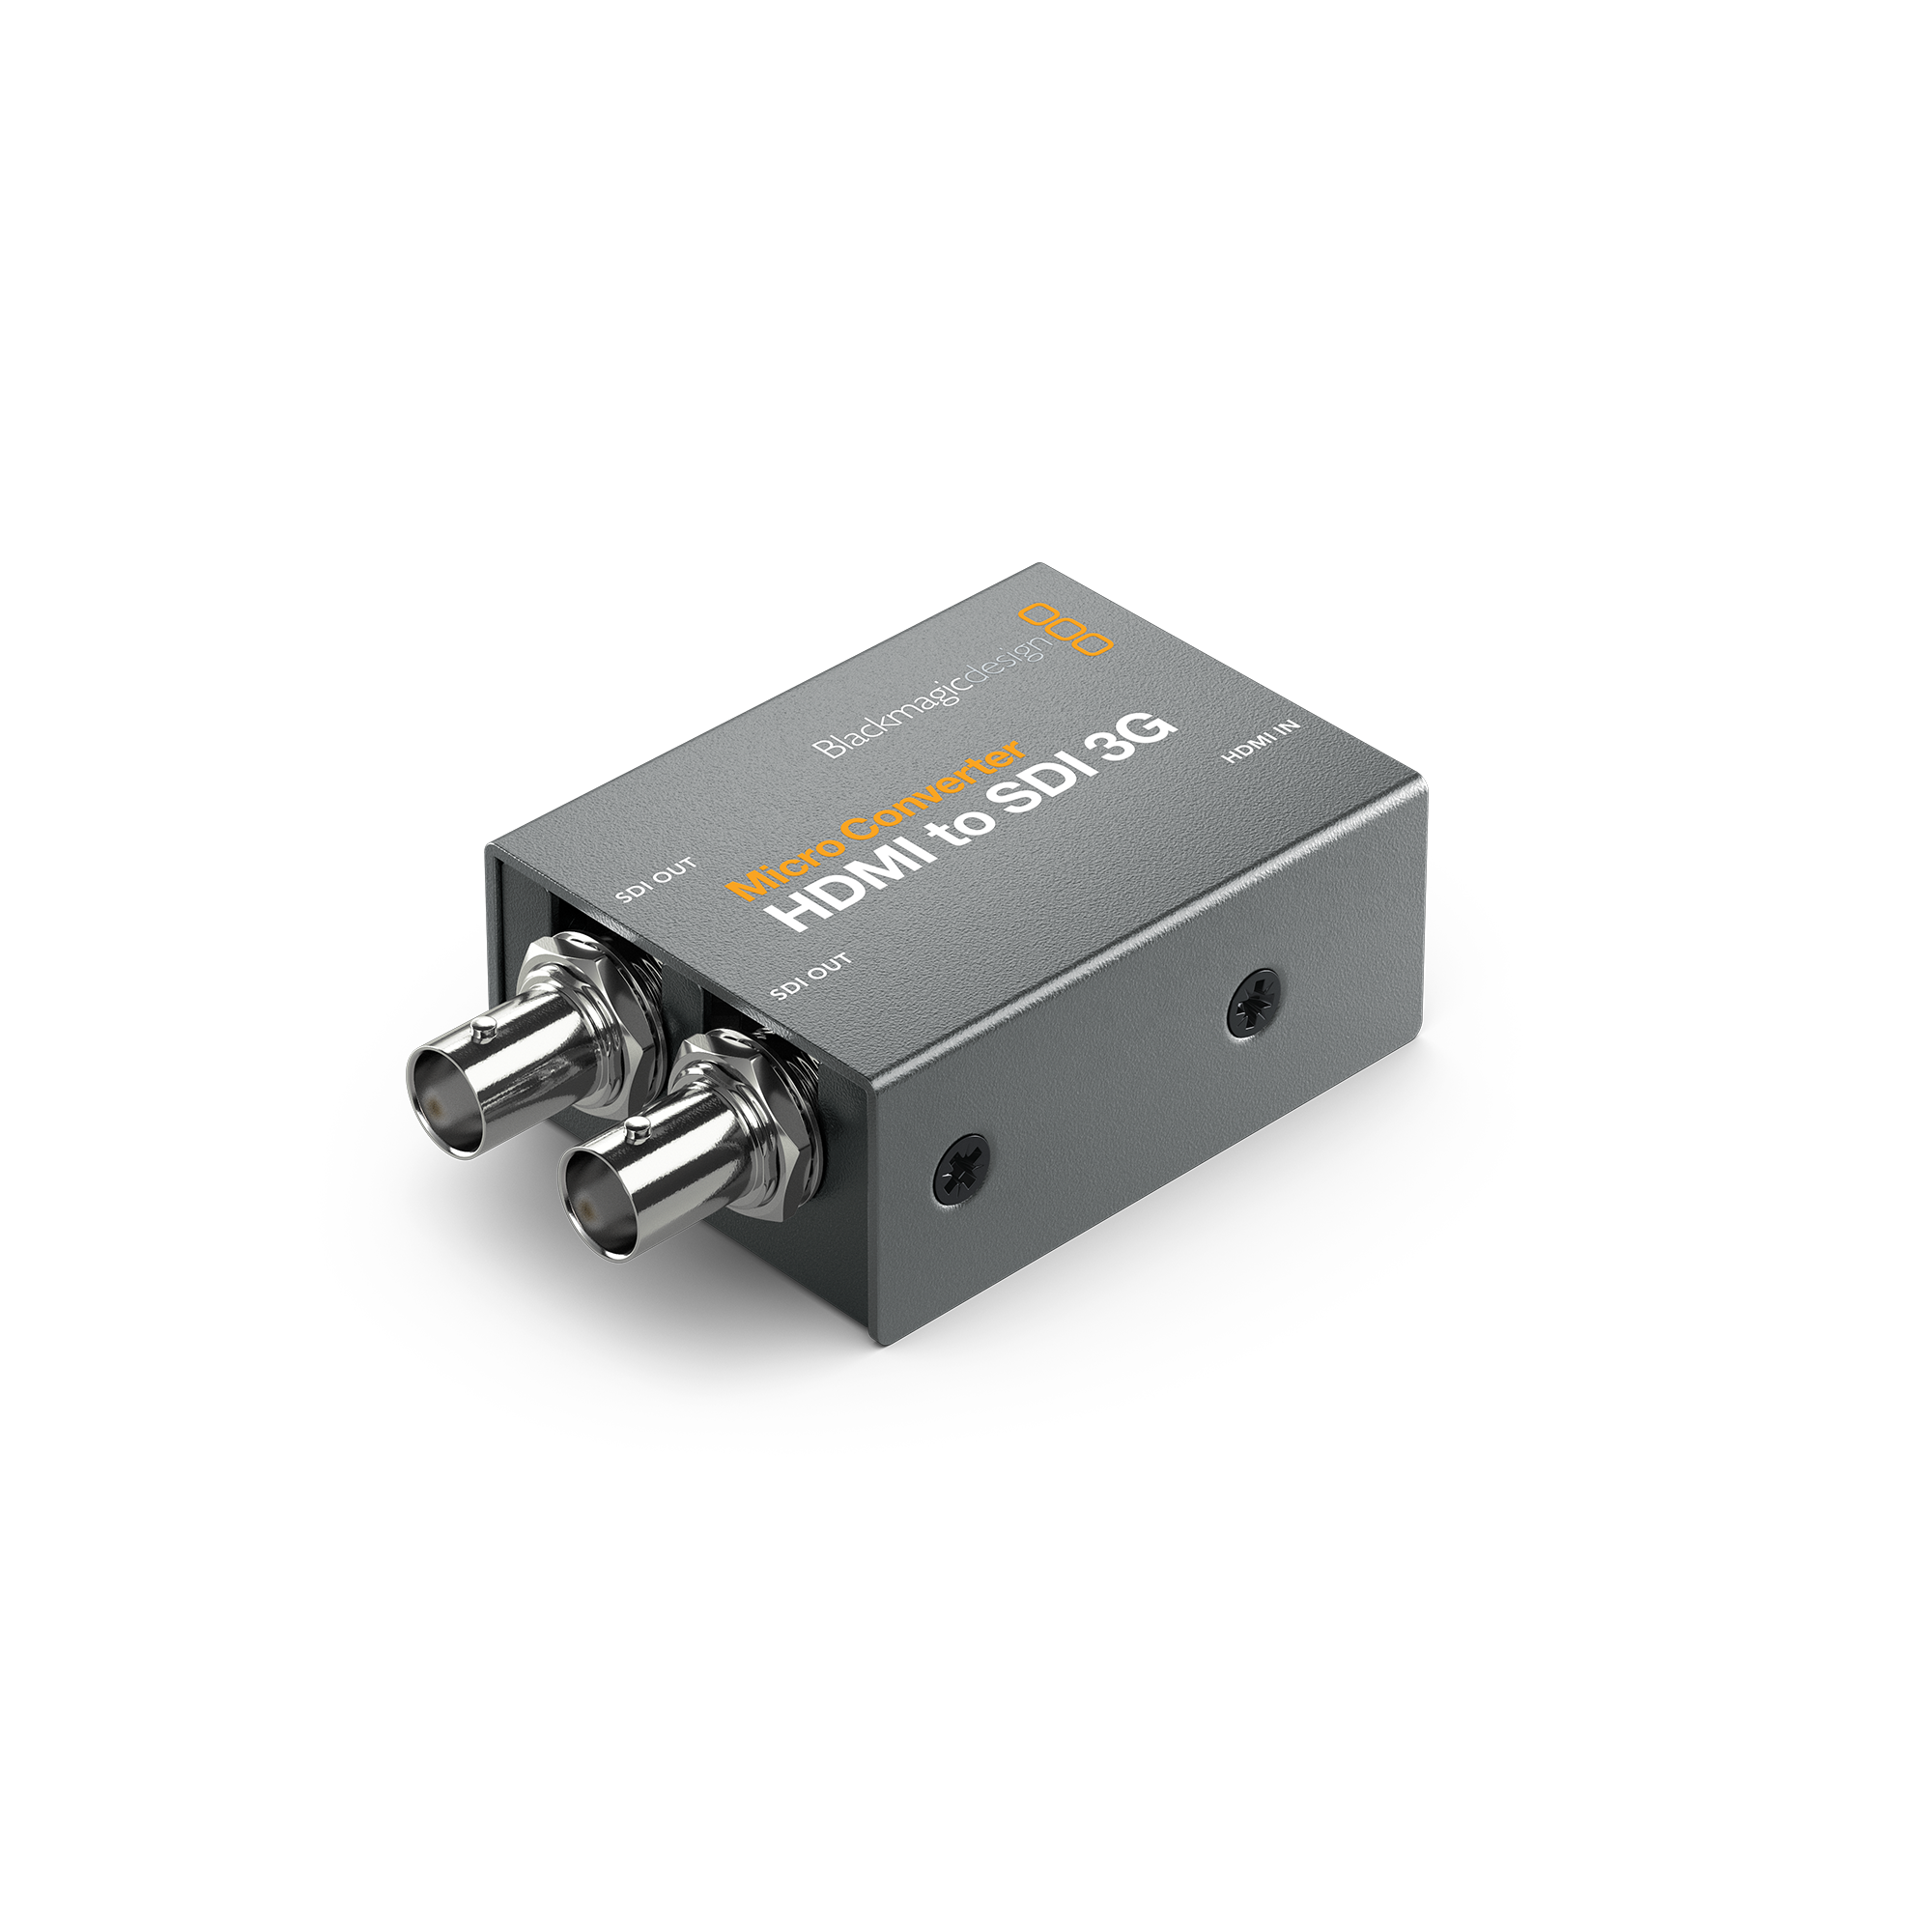 Blackmagic Design Micro Converter HDMI to SDI 3G with Power Supply